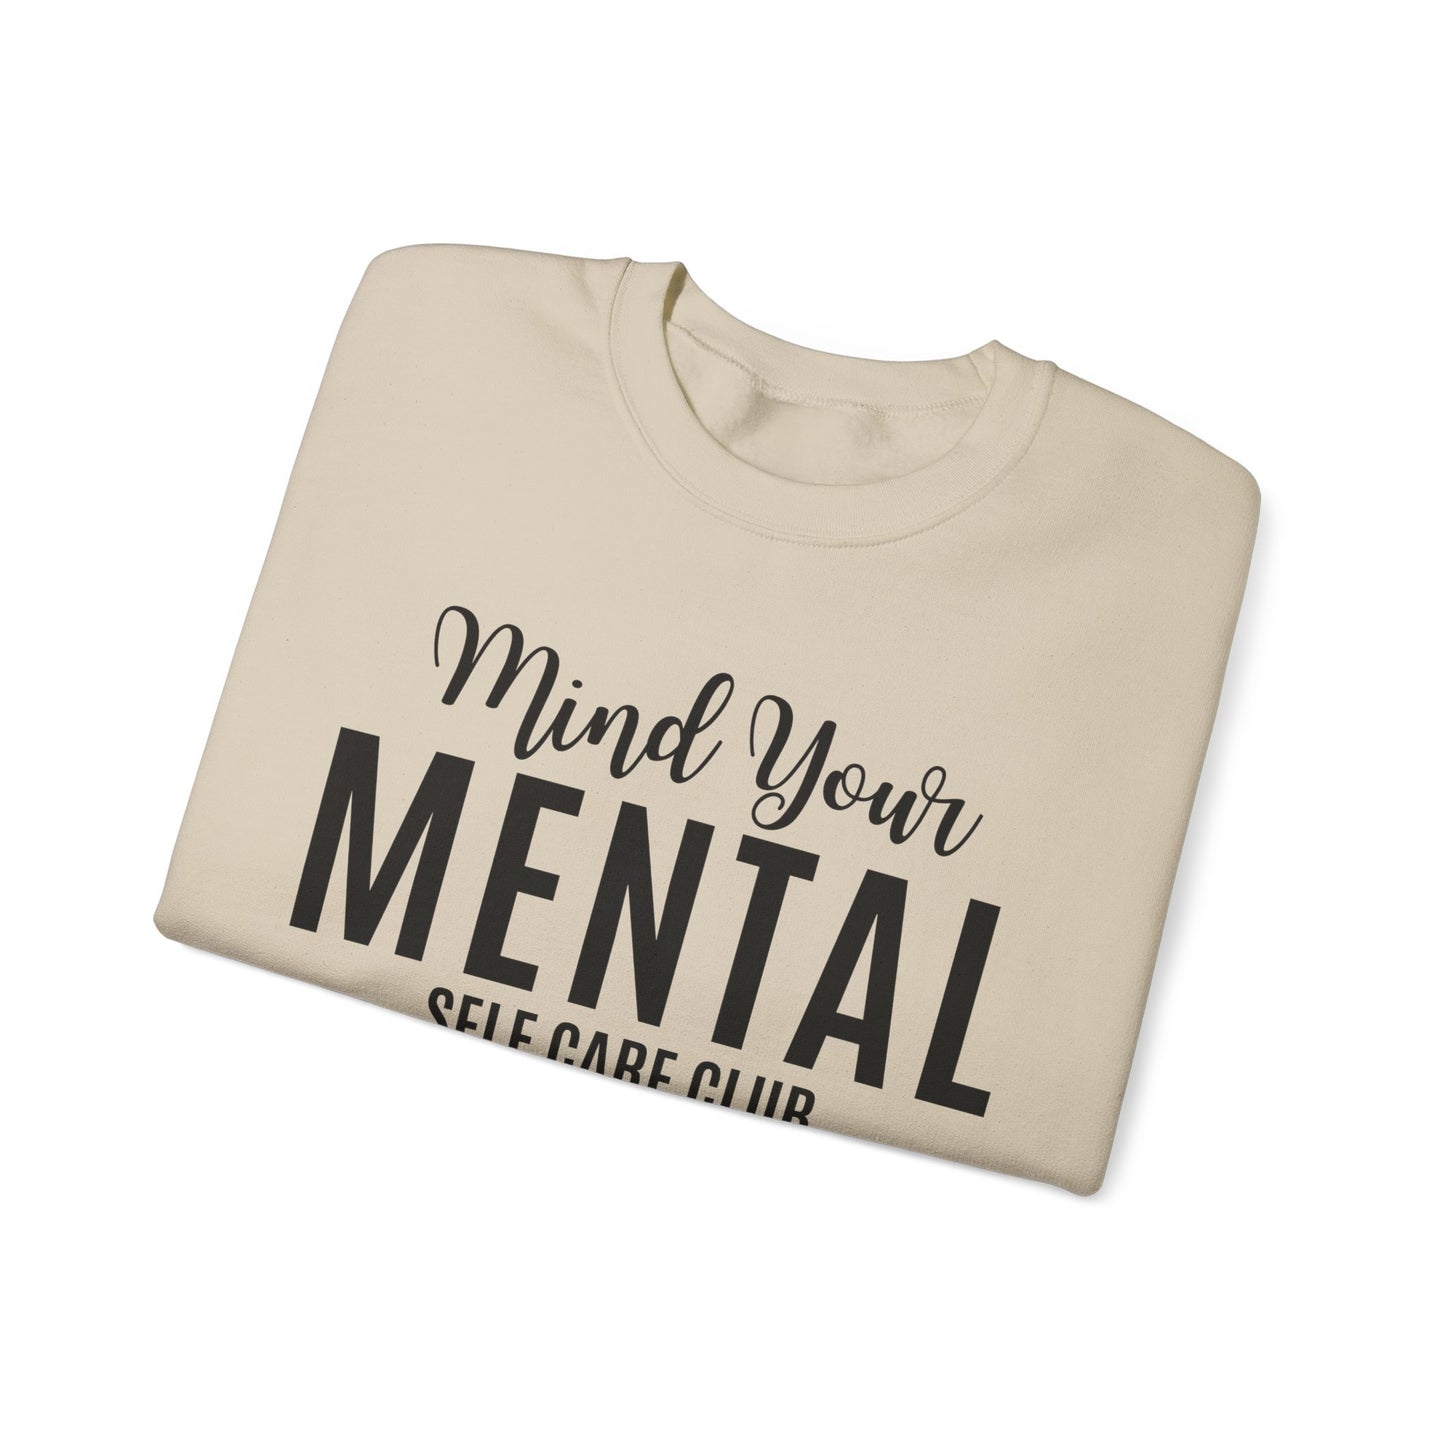 Mind Your Mental SCC Sweatshirt